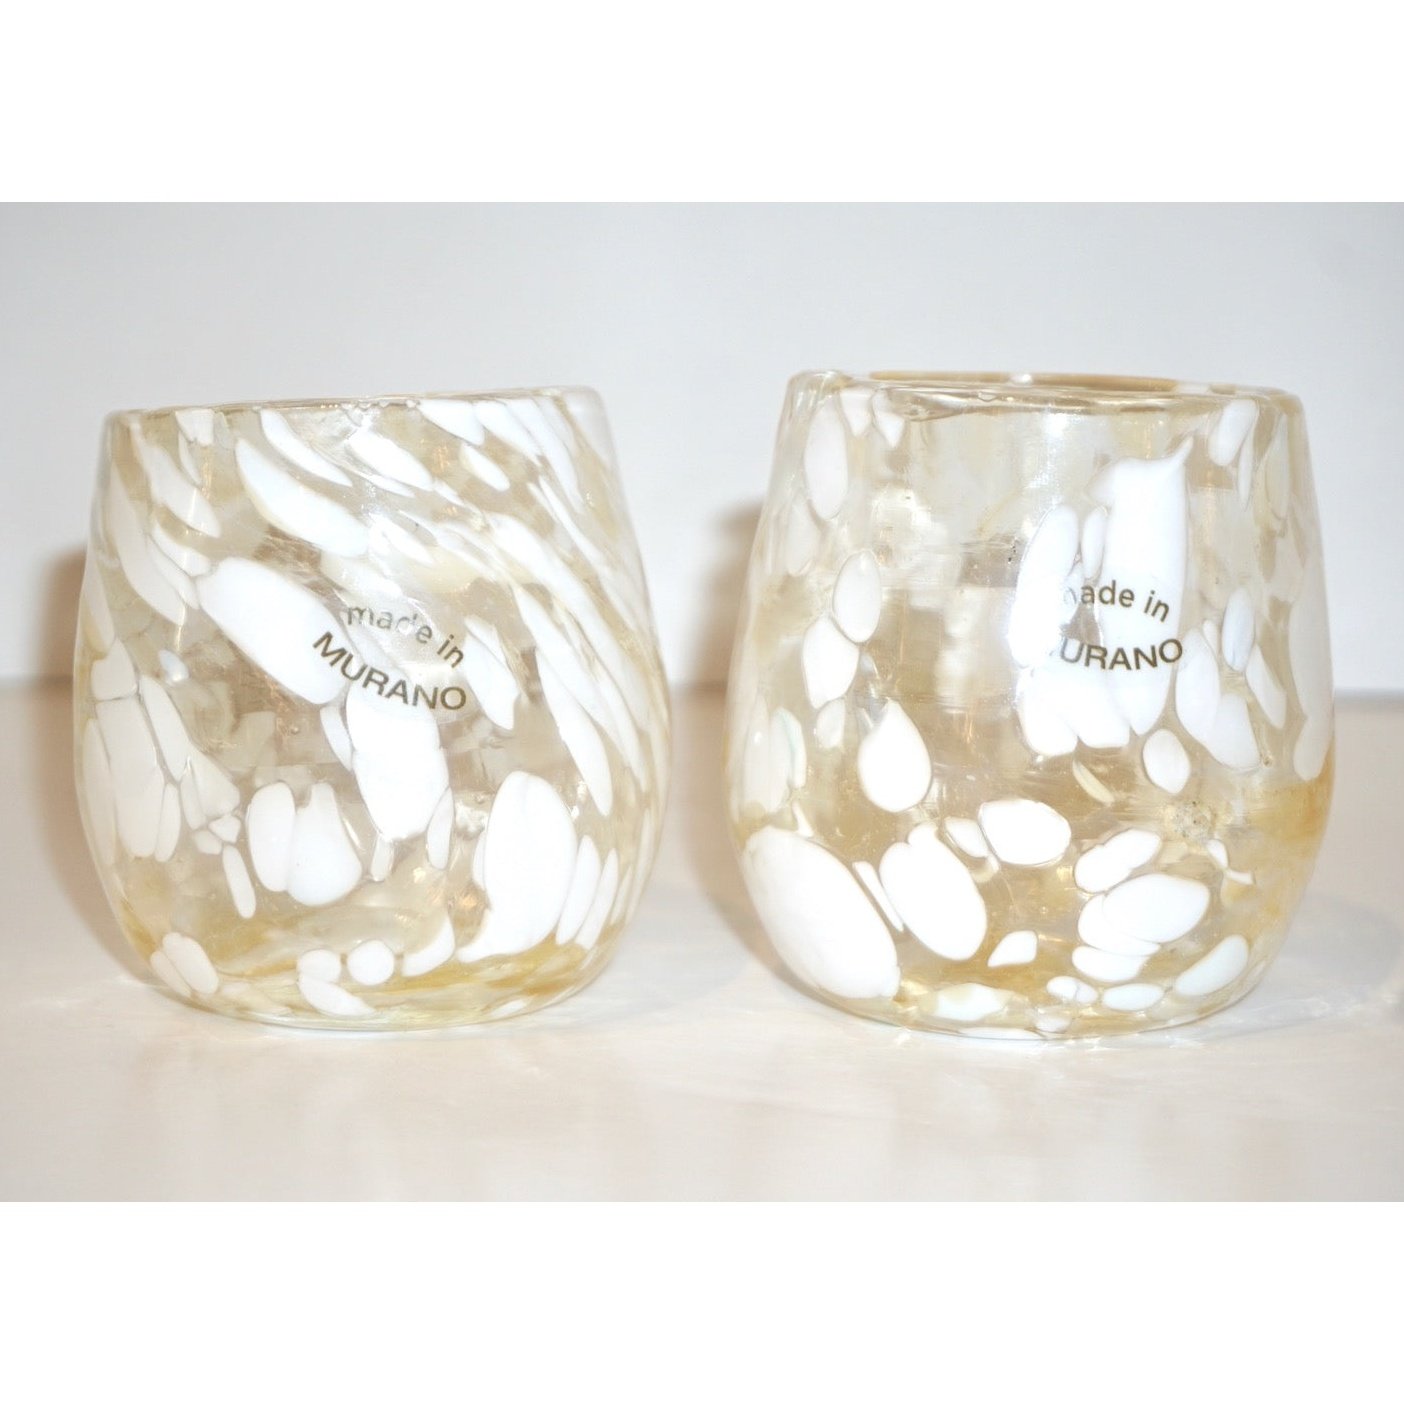 Italian Mottled Murano Glass Modern Pair of Drinking Glasses with White Murrine